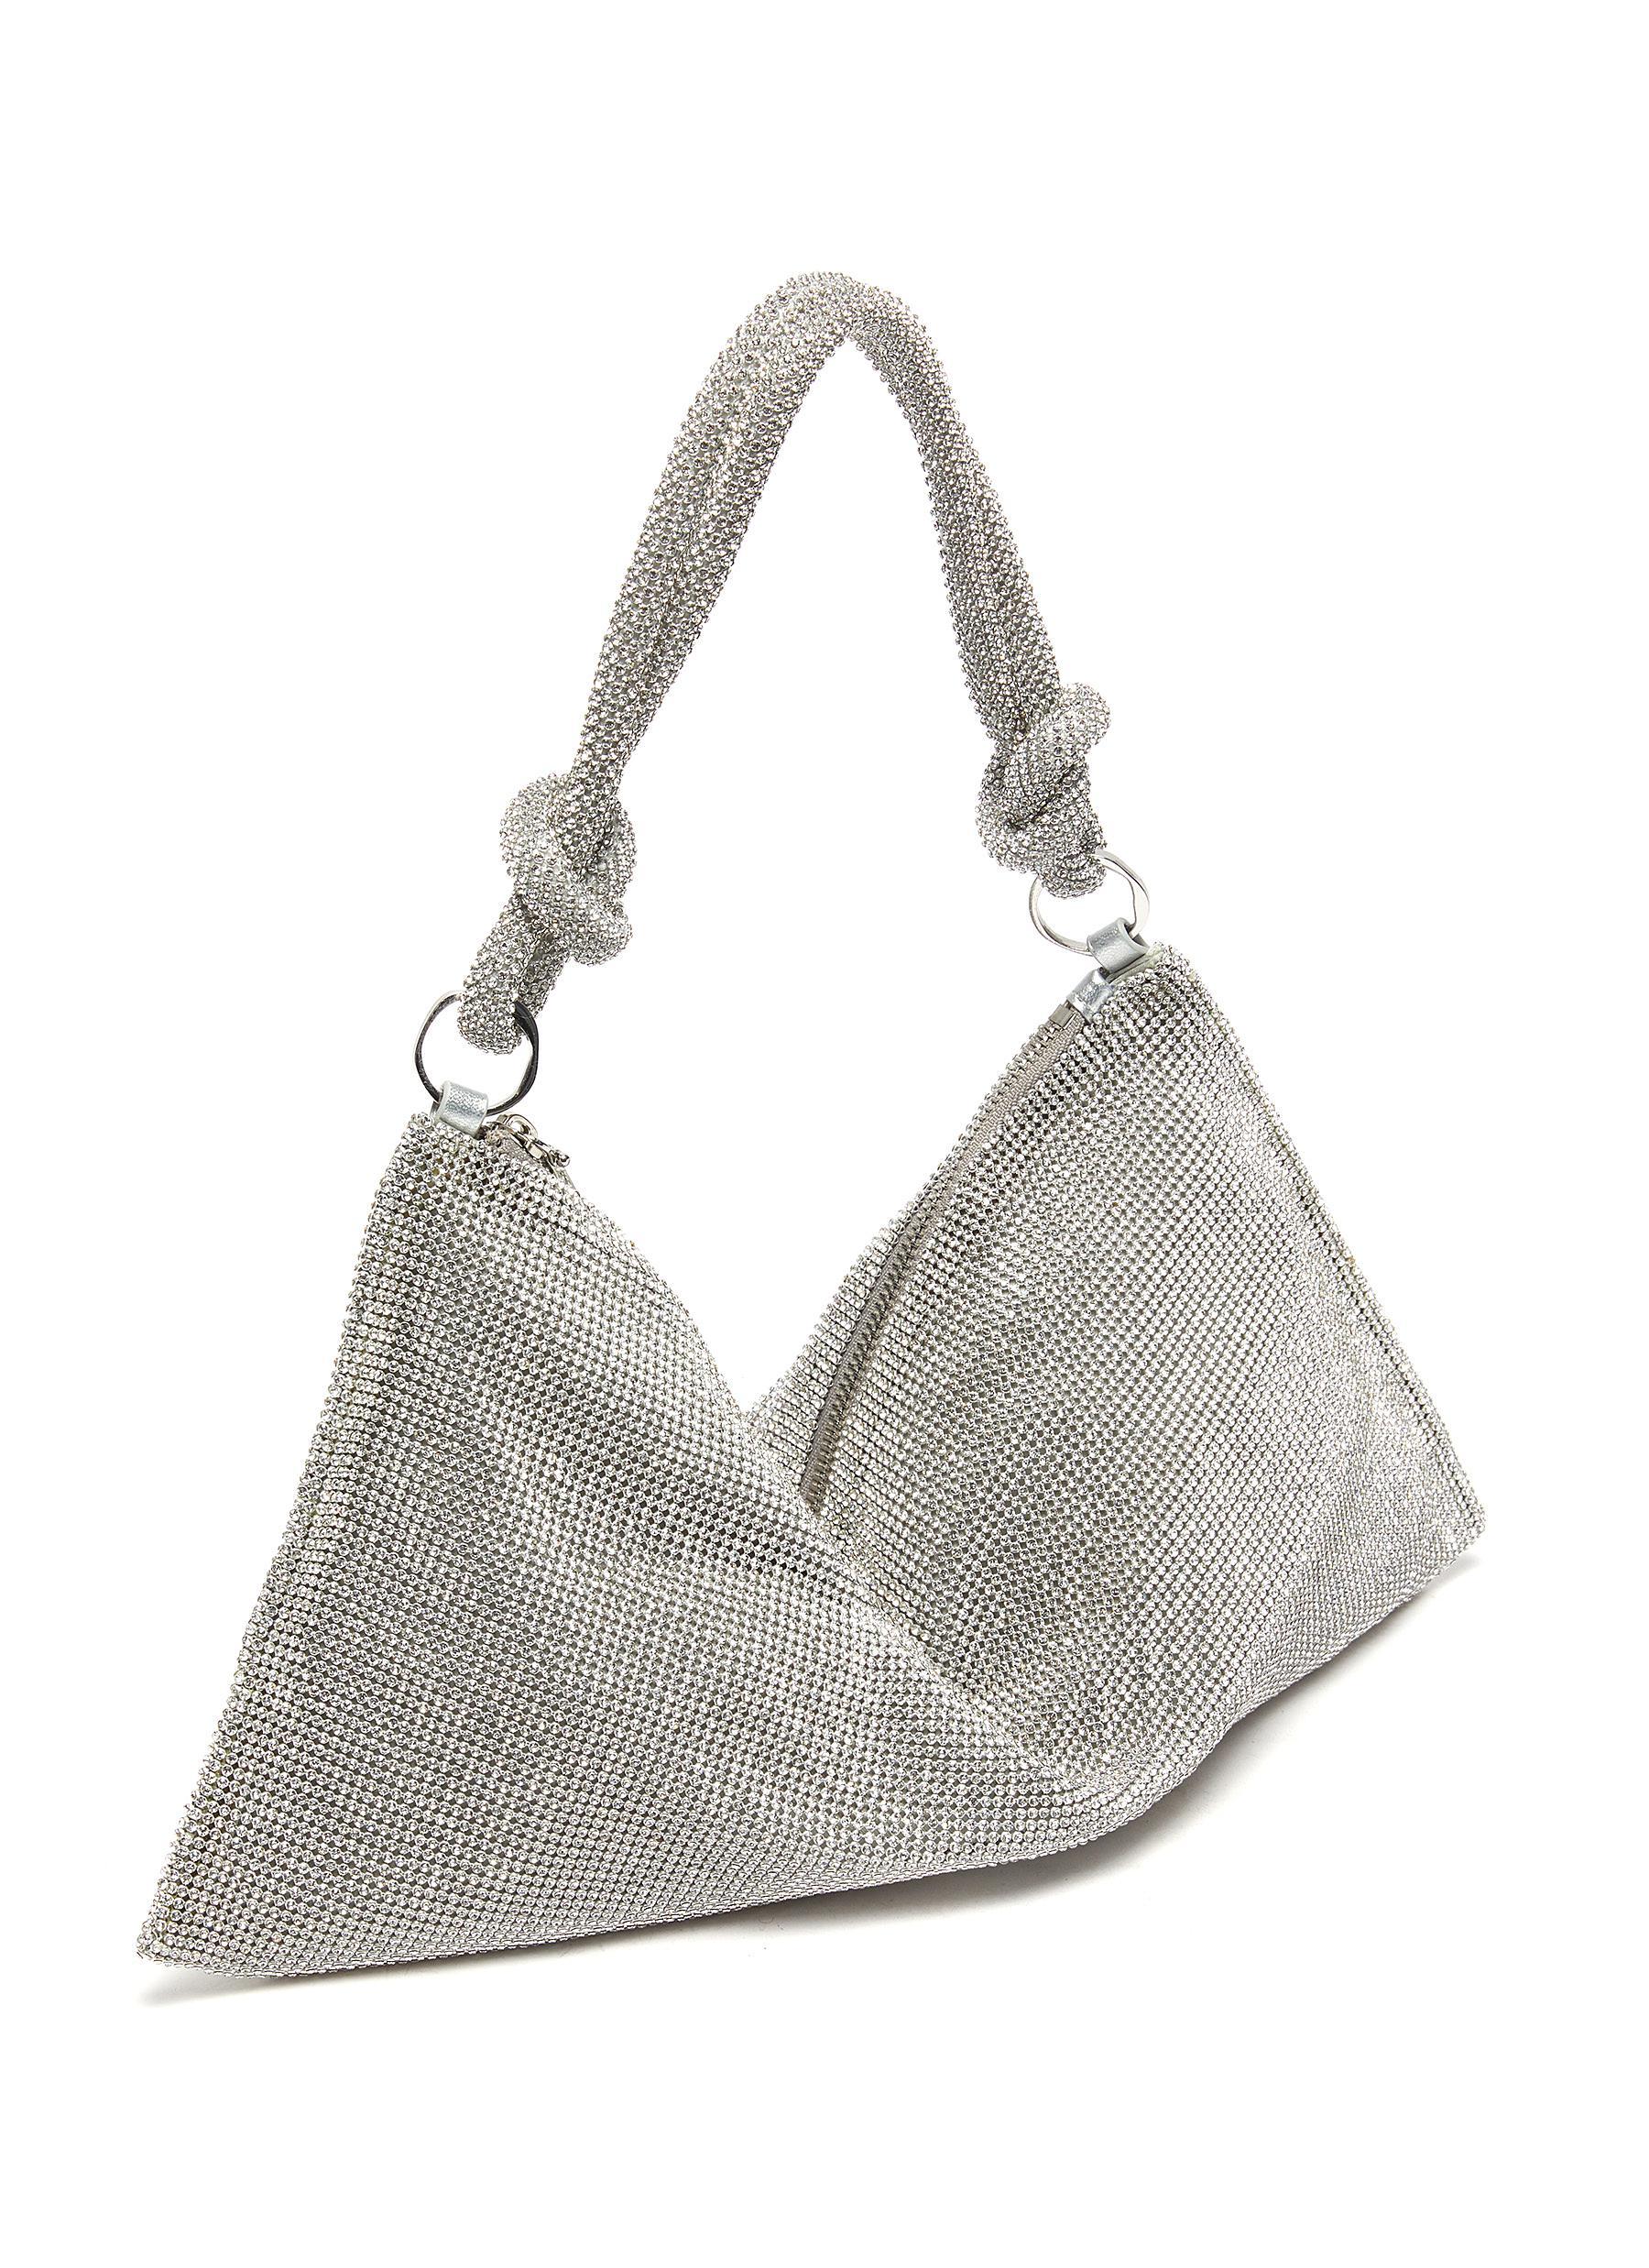 Luxury Rhinestone Shoulder Bag Silver Purse Soft Pouch Bags Knot Bag Handbag